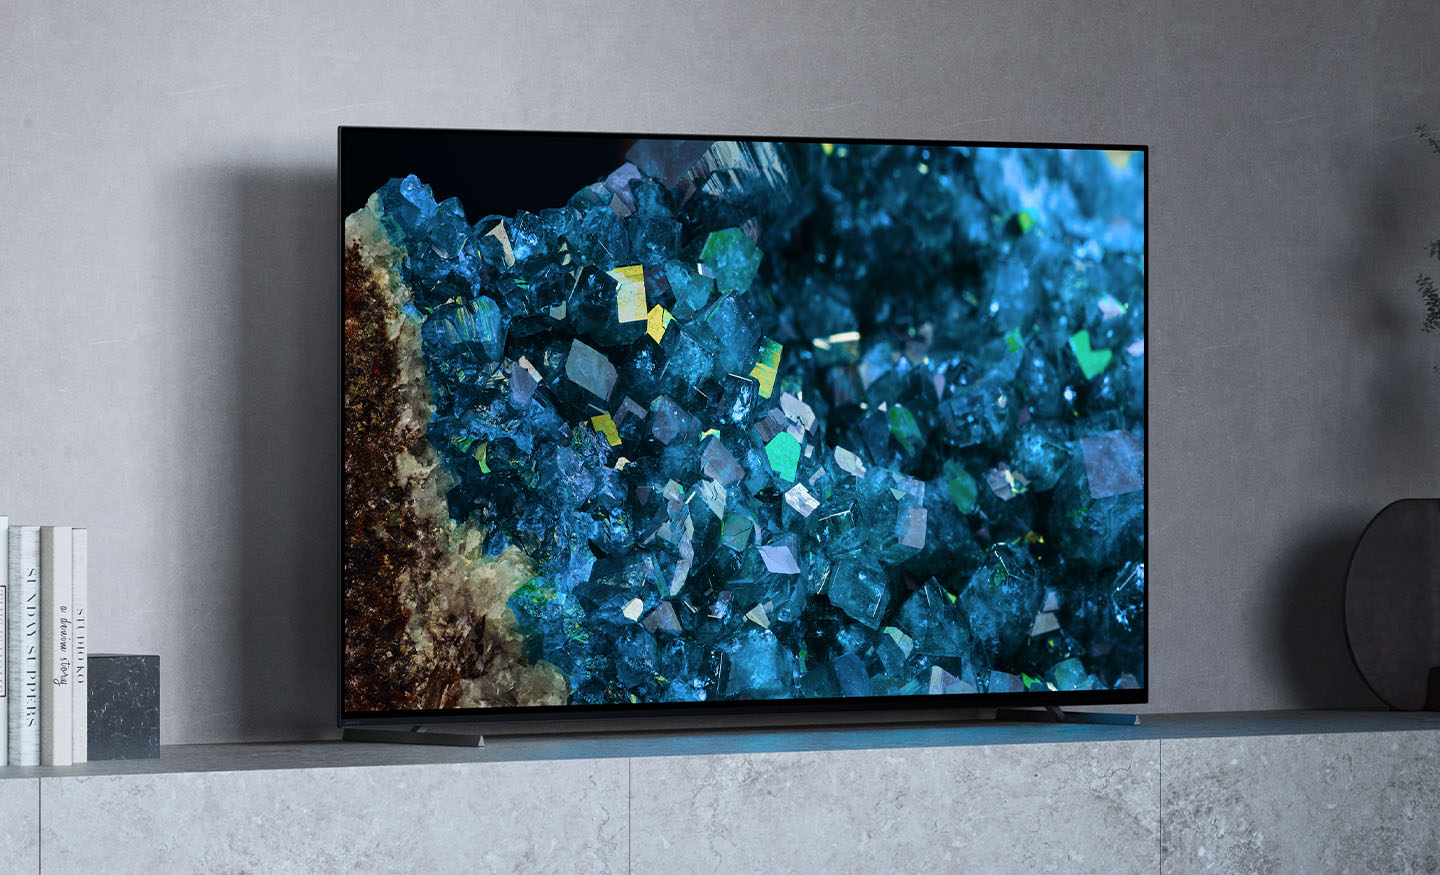 Sony 65 Class X80J Series LED 4K UHD Smart Google TV cl - Best Buy